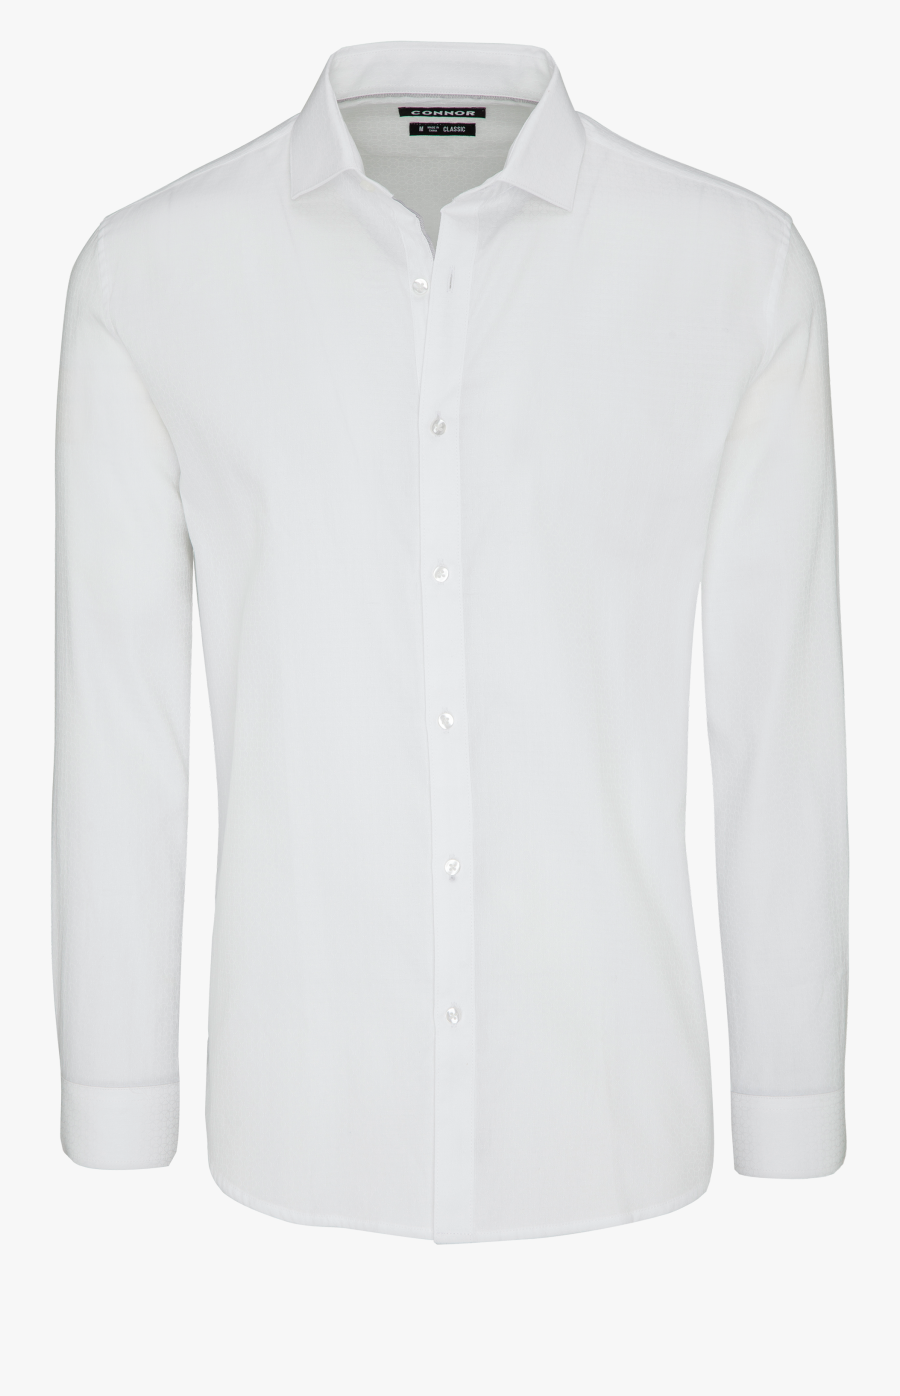 Dress Shirt Clipart Plain White Shirt - White Dress Shirt Png, Transparent Clipart